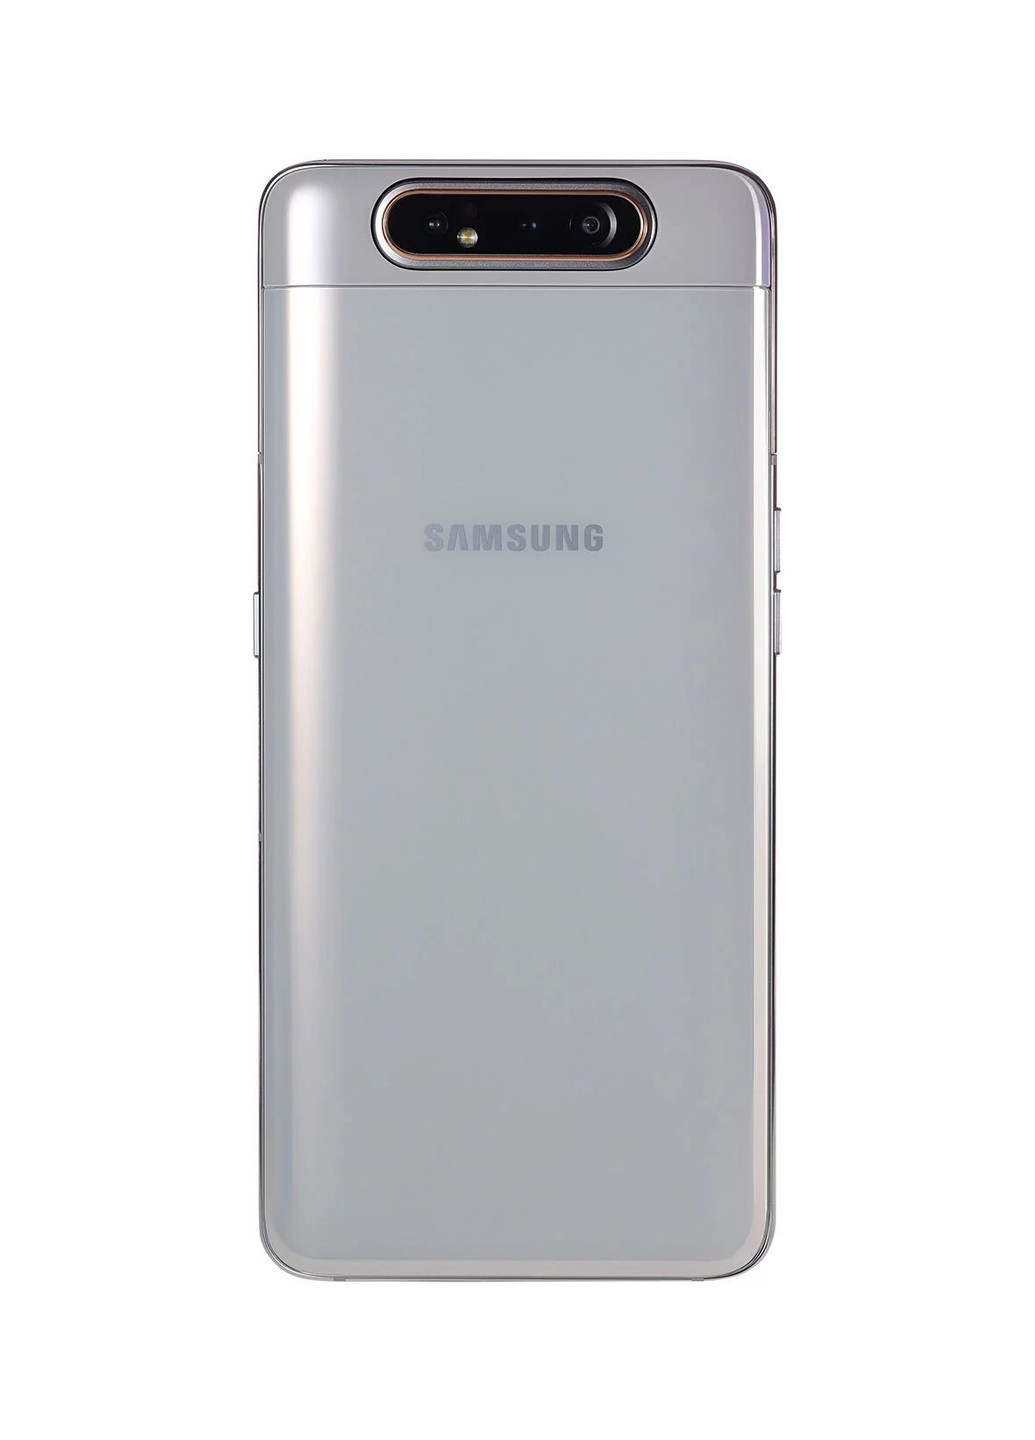 Смартфон Samsung Galaxy A80 8/128GB Silver (SM-A805FZSDSEK) серебряный